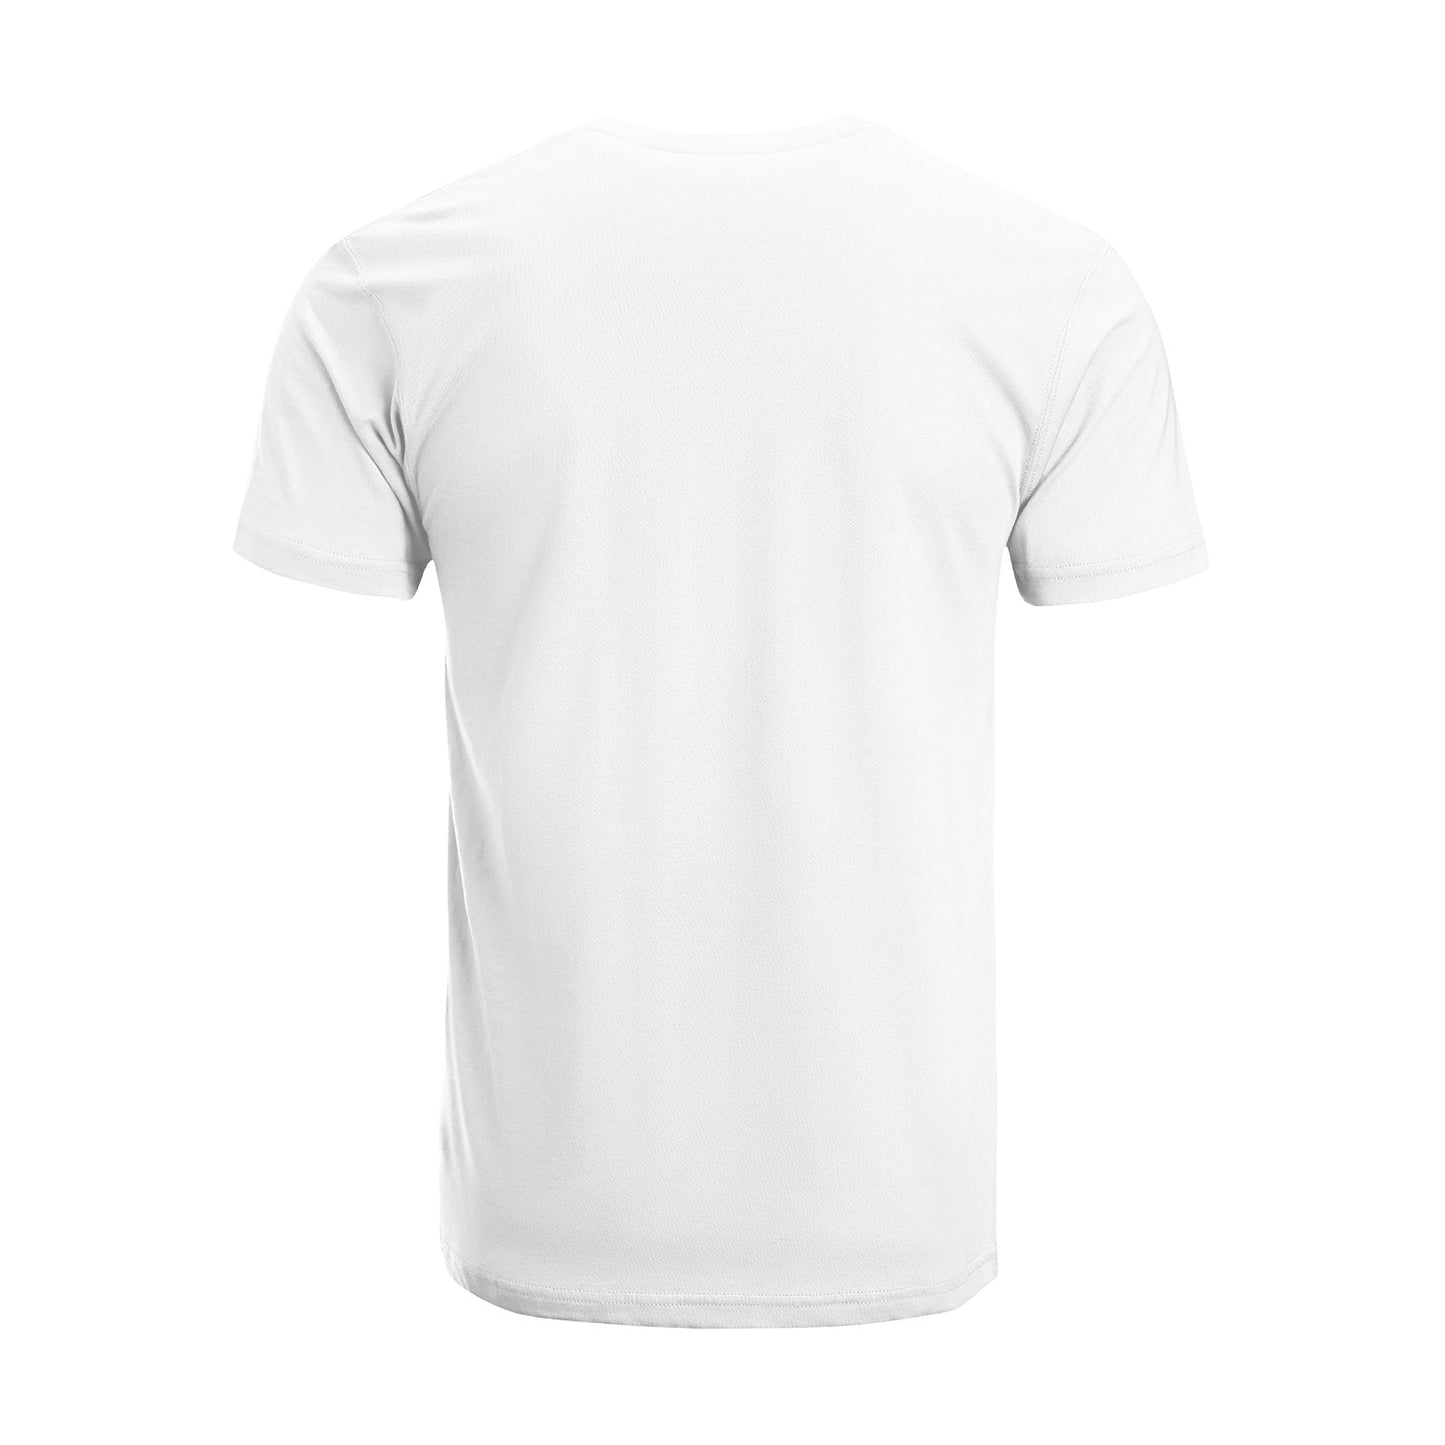 Unisex Short Sleeve Crew Neck Cotton Jersey T-Shirt MOM 48